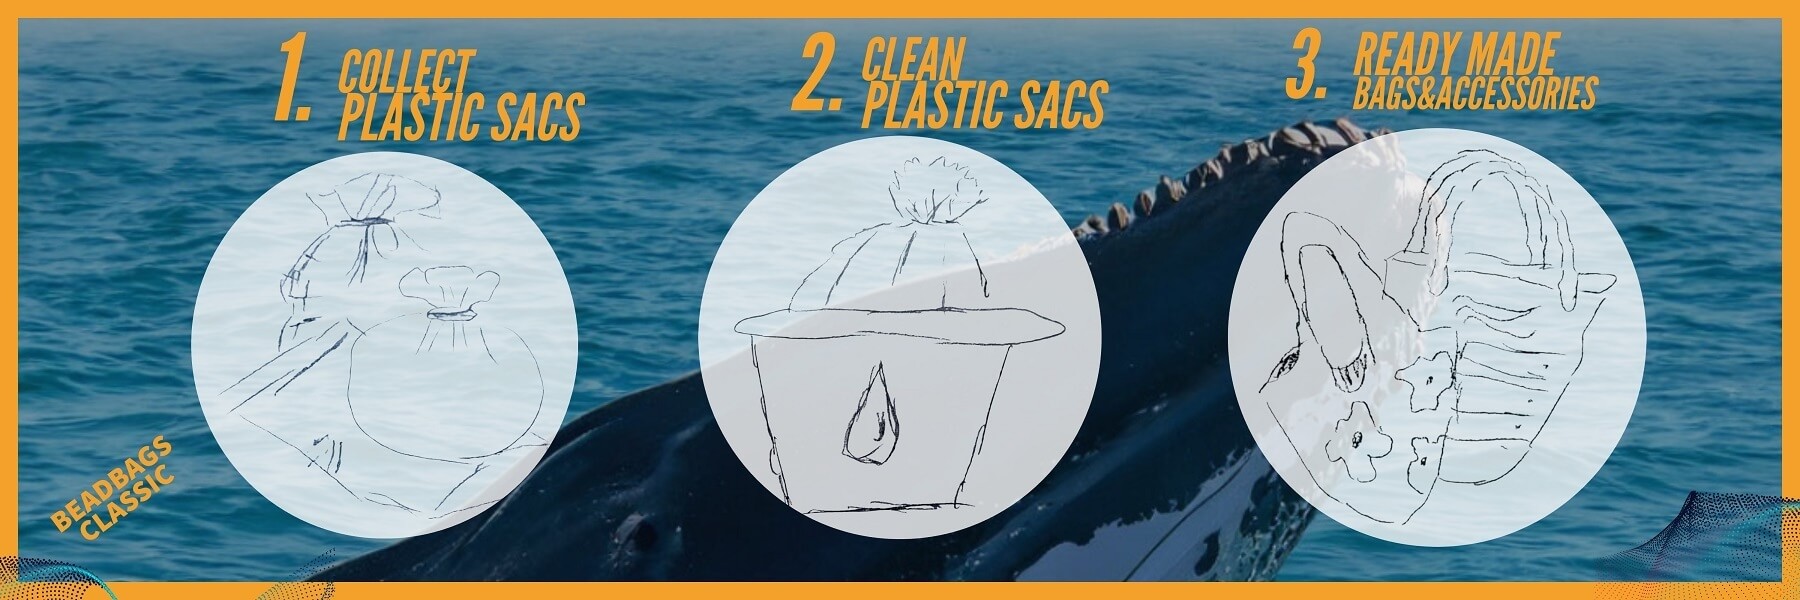 Schemal zum Plastik Recyclingprozess Beadbags Classic